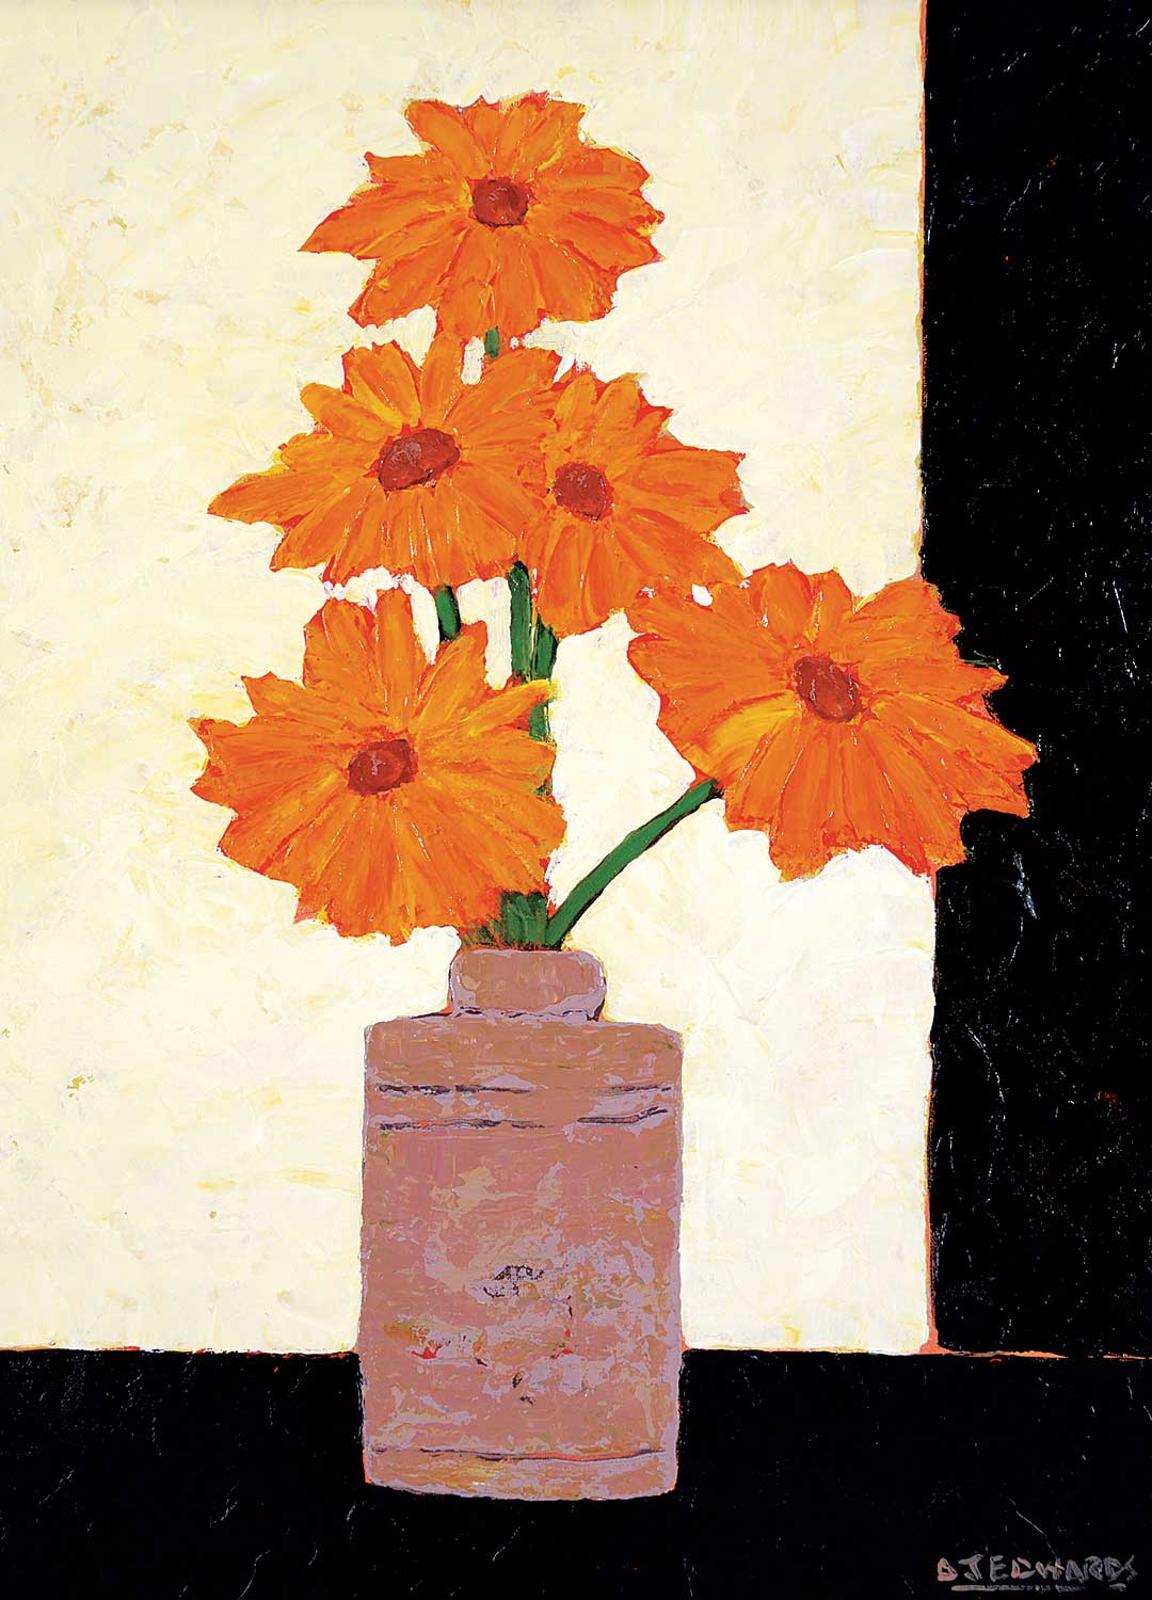 David J. Edwards - Untitled - Orange Blooms